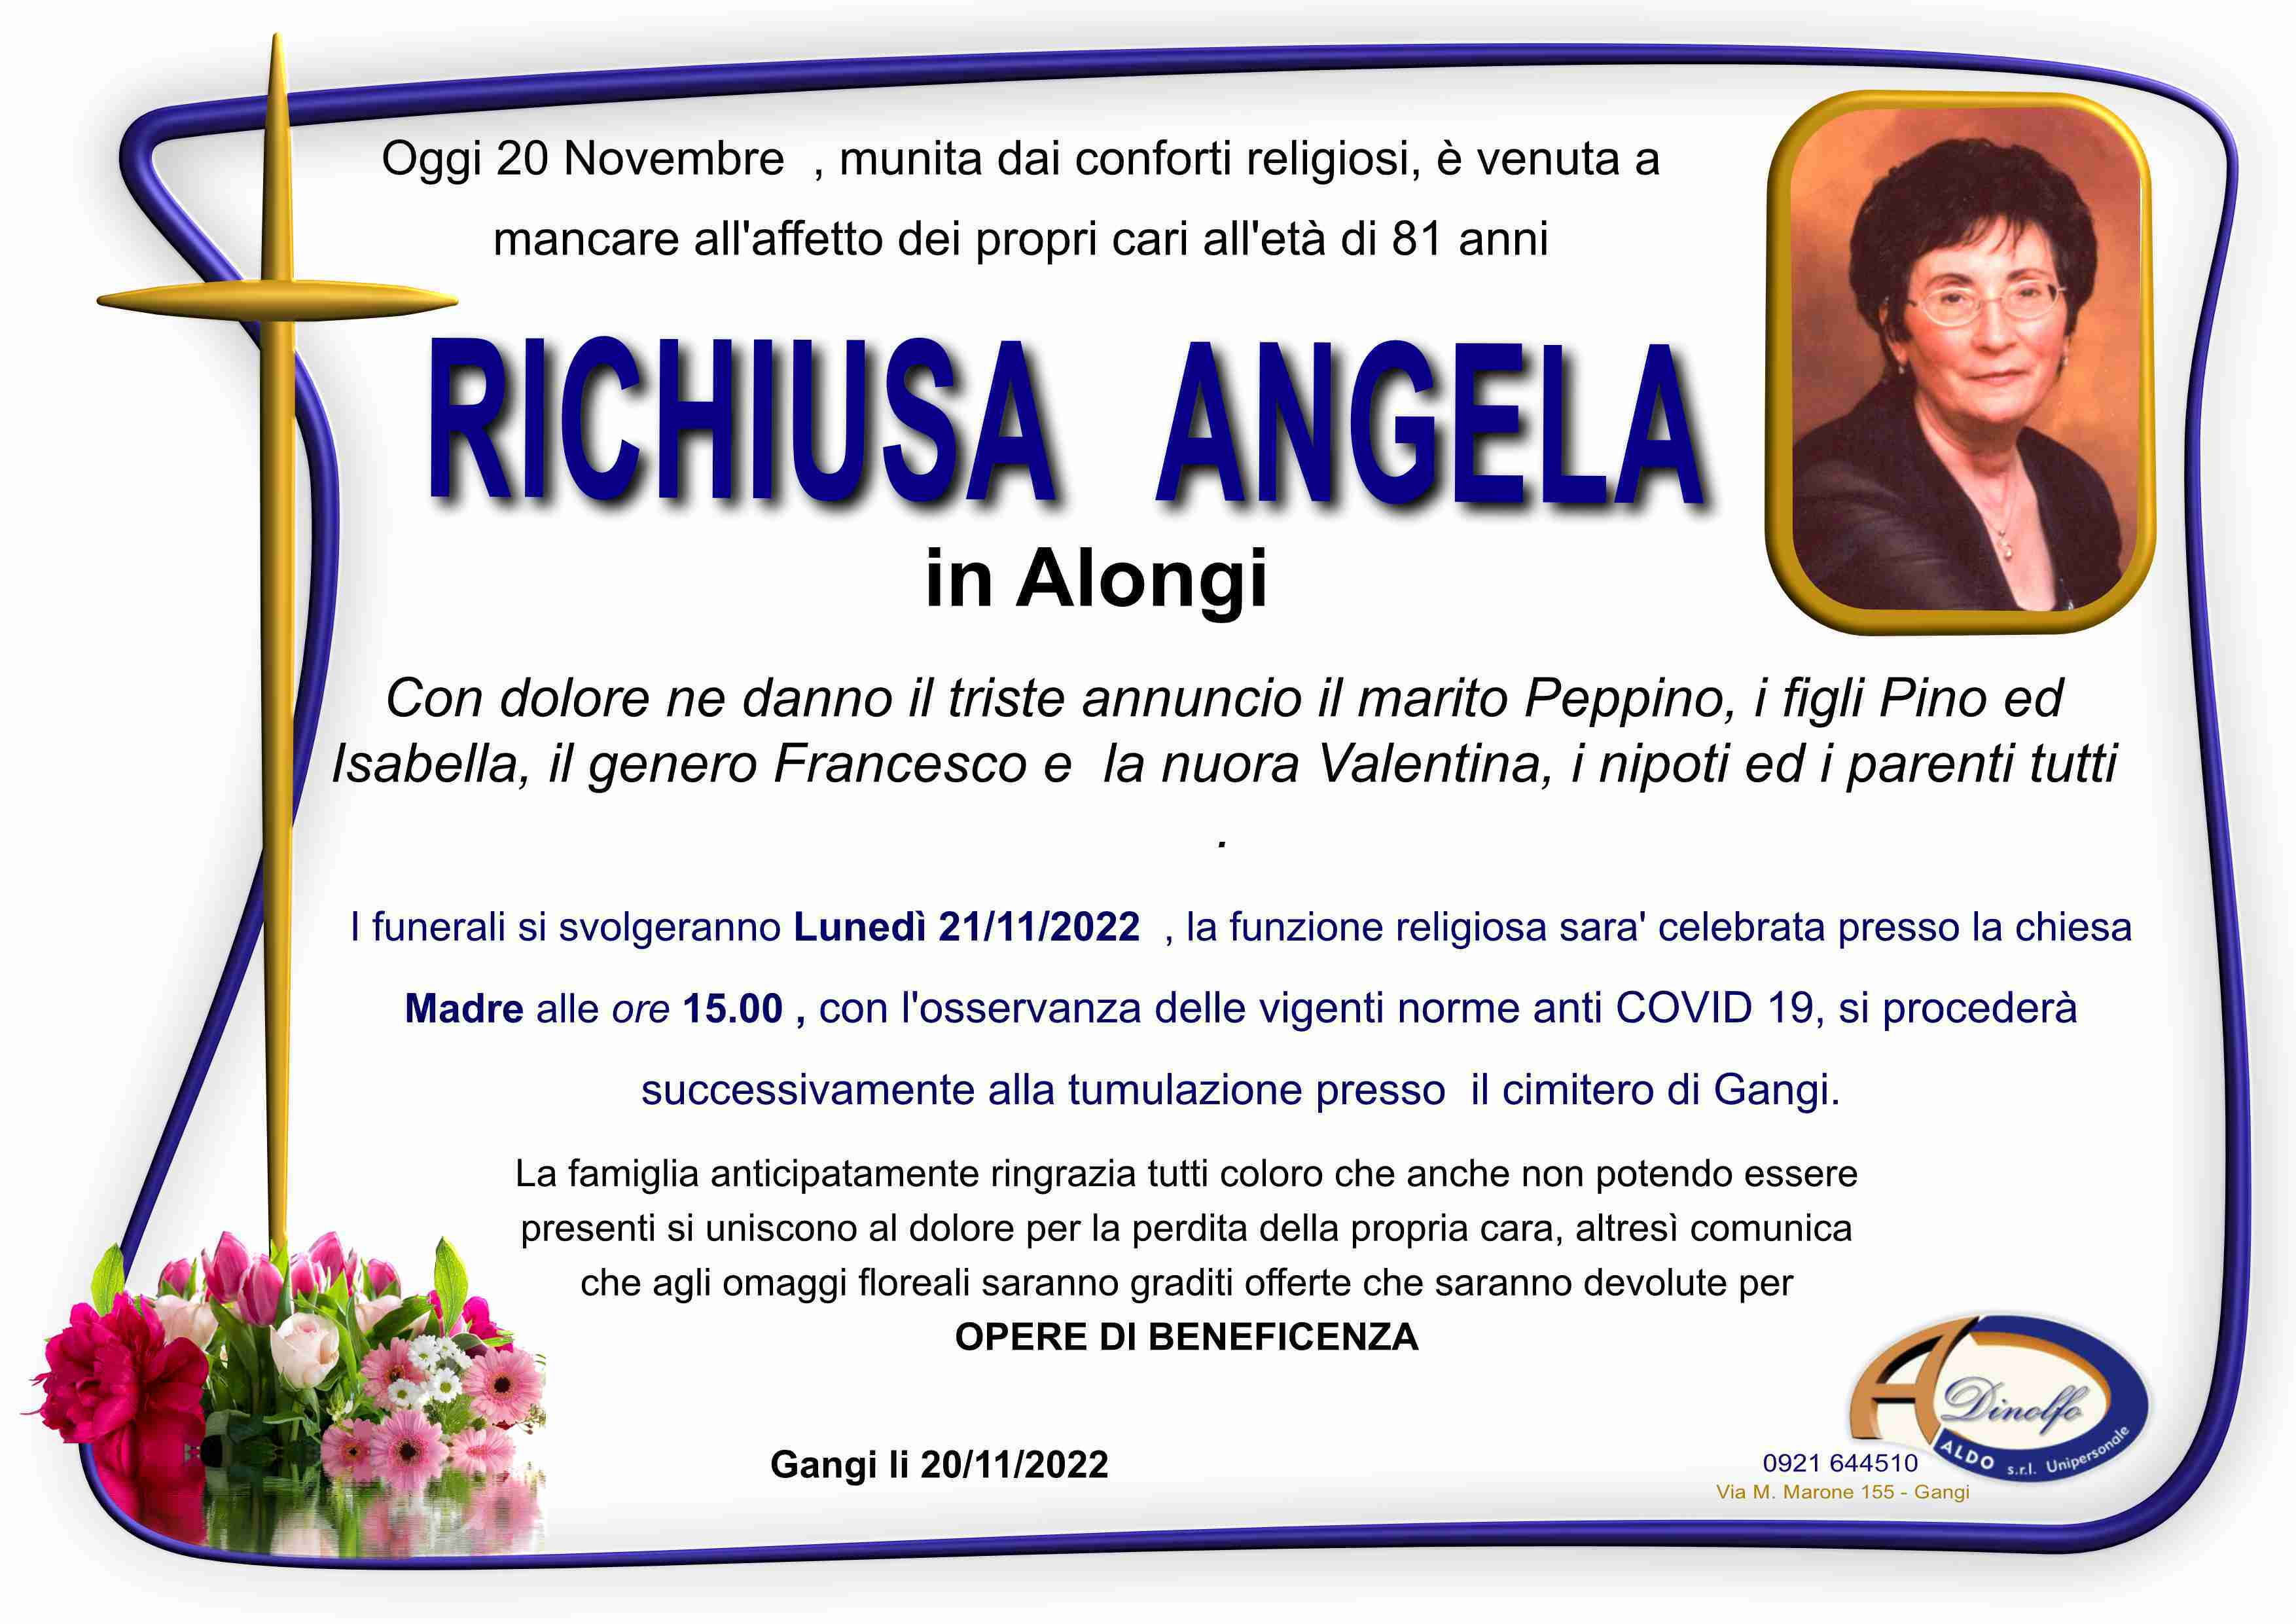 Angela Richiusa